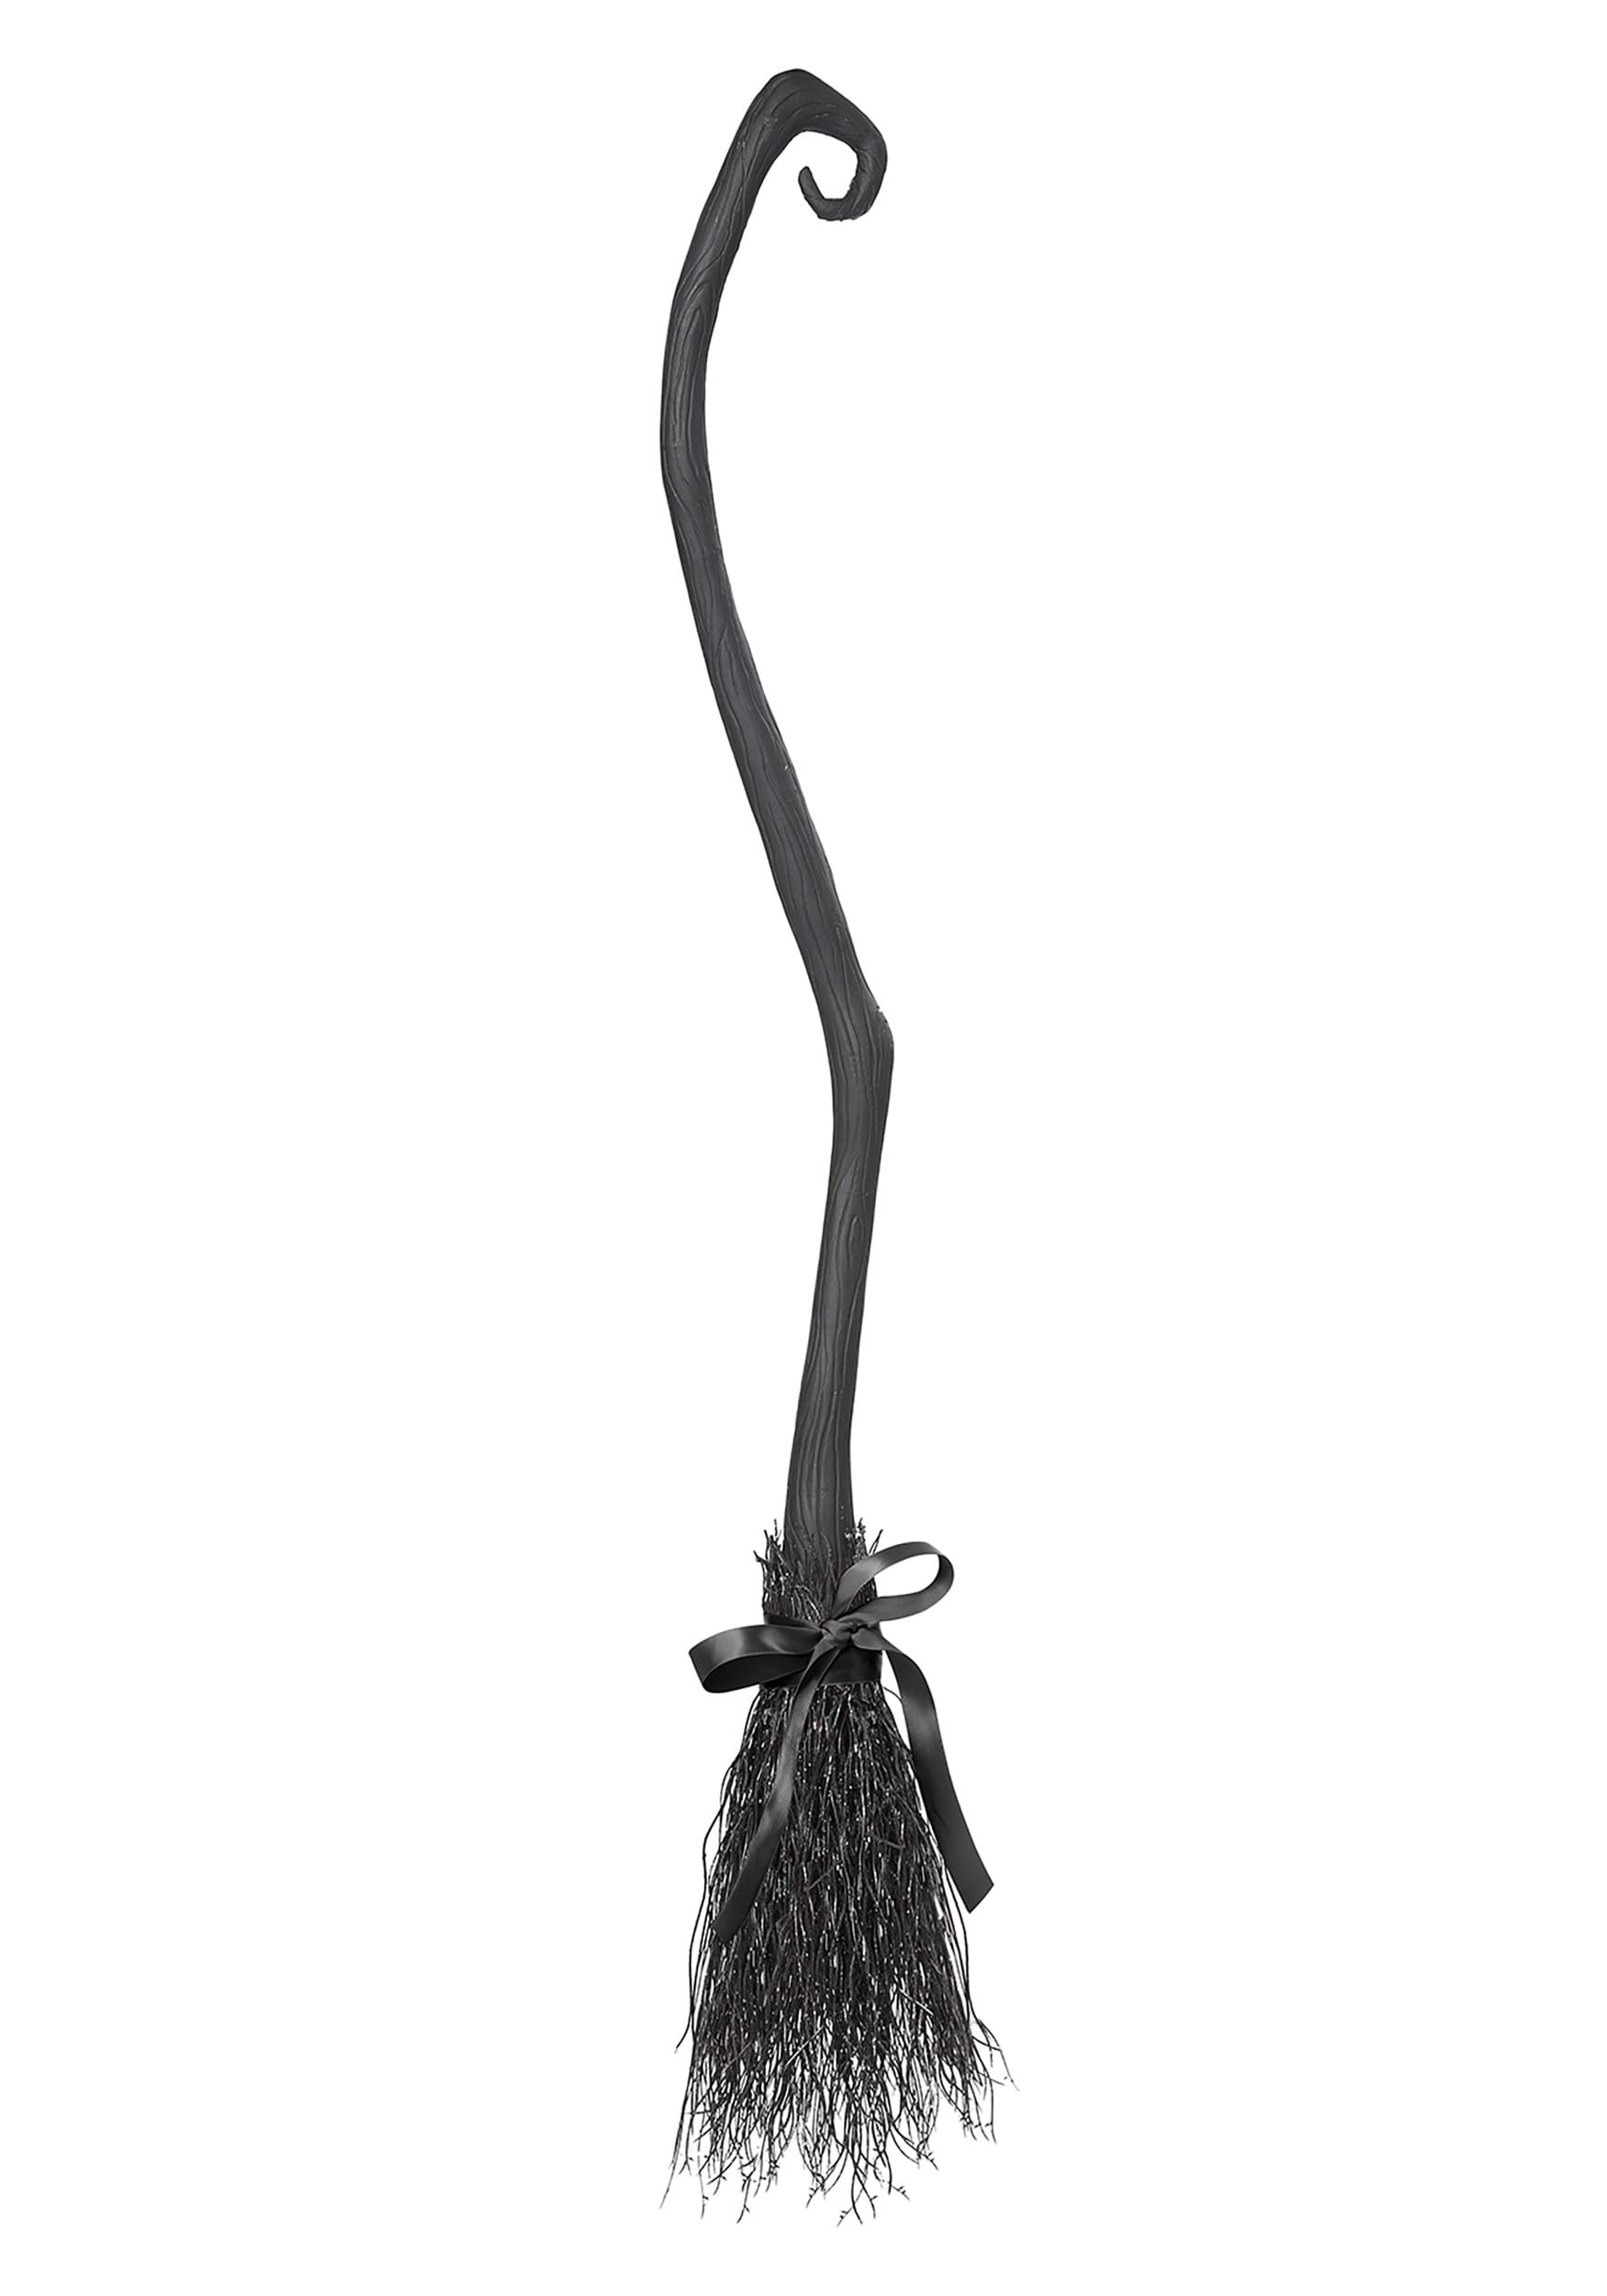 Black Witch's Broom